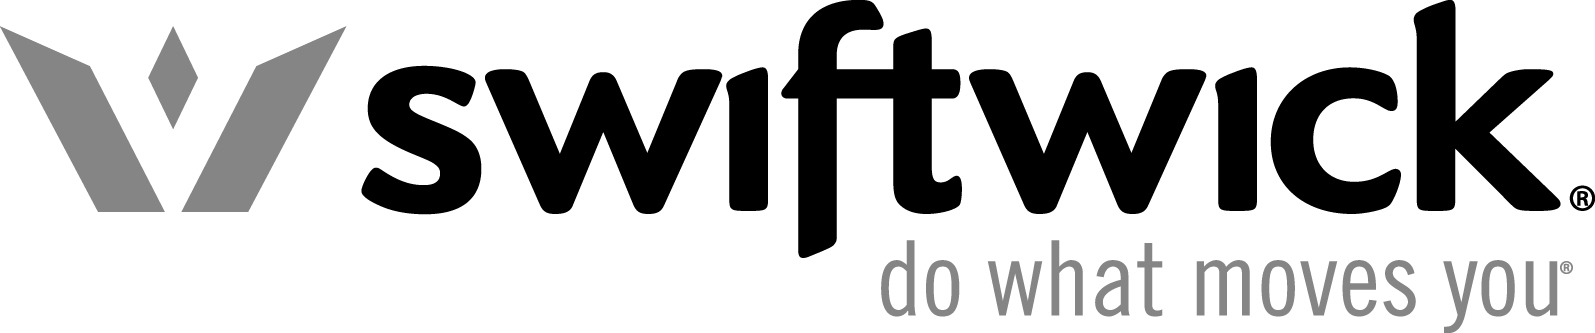 Swiftwick logo - link to catalog